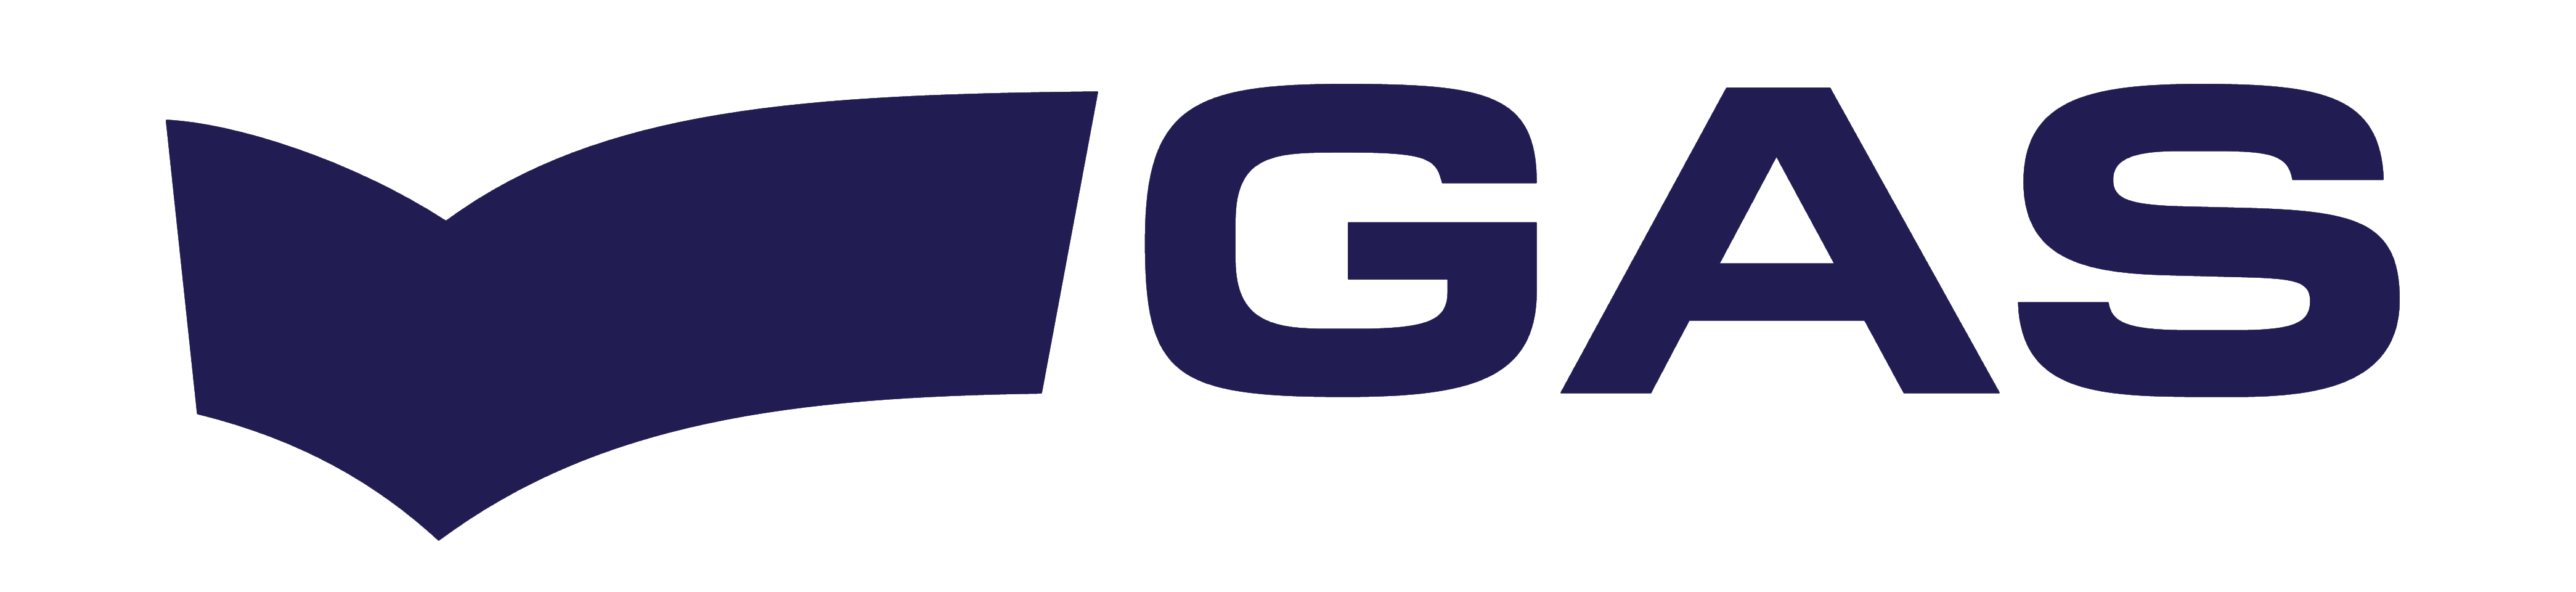 Gas Jeans logo, logotype